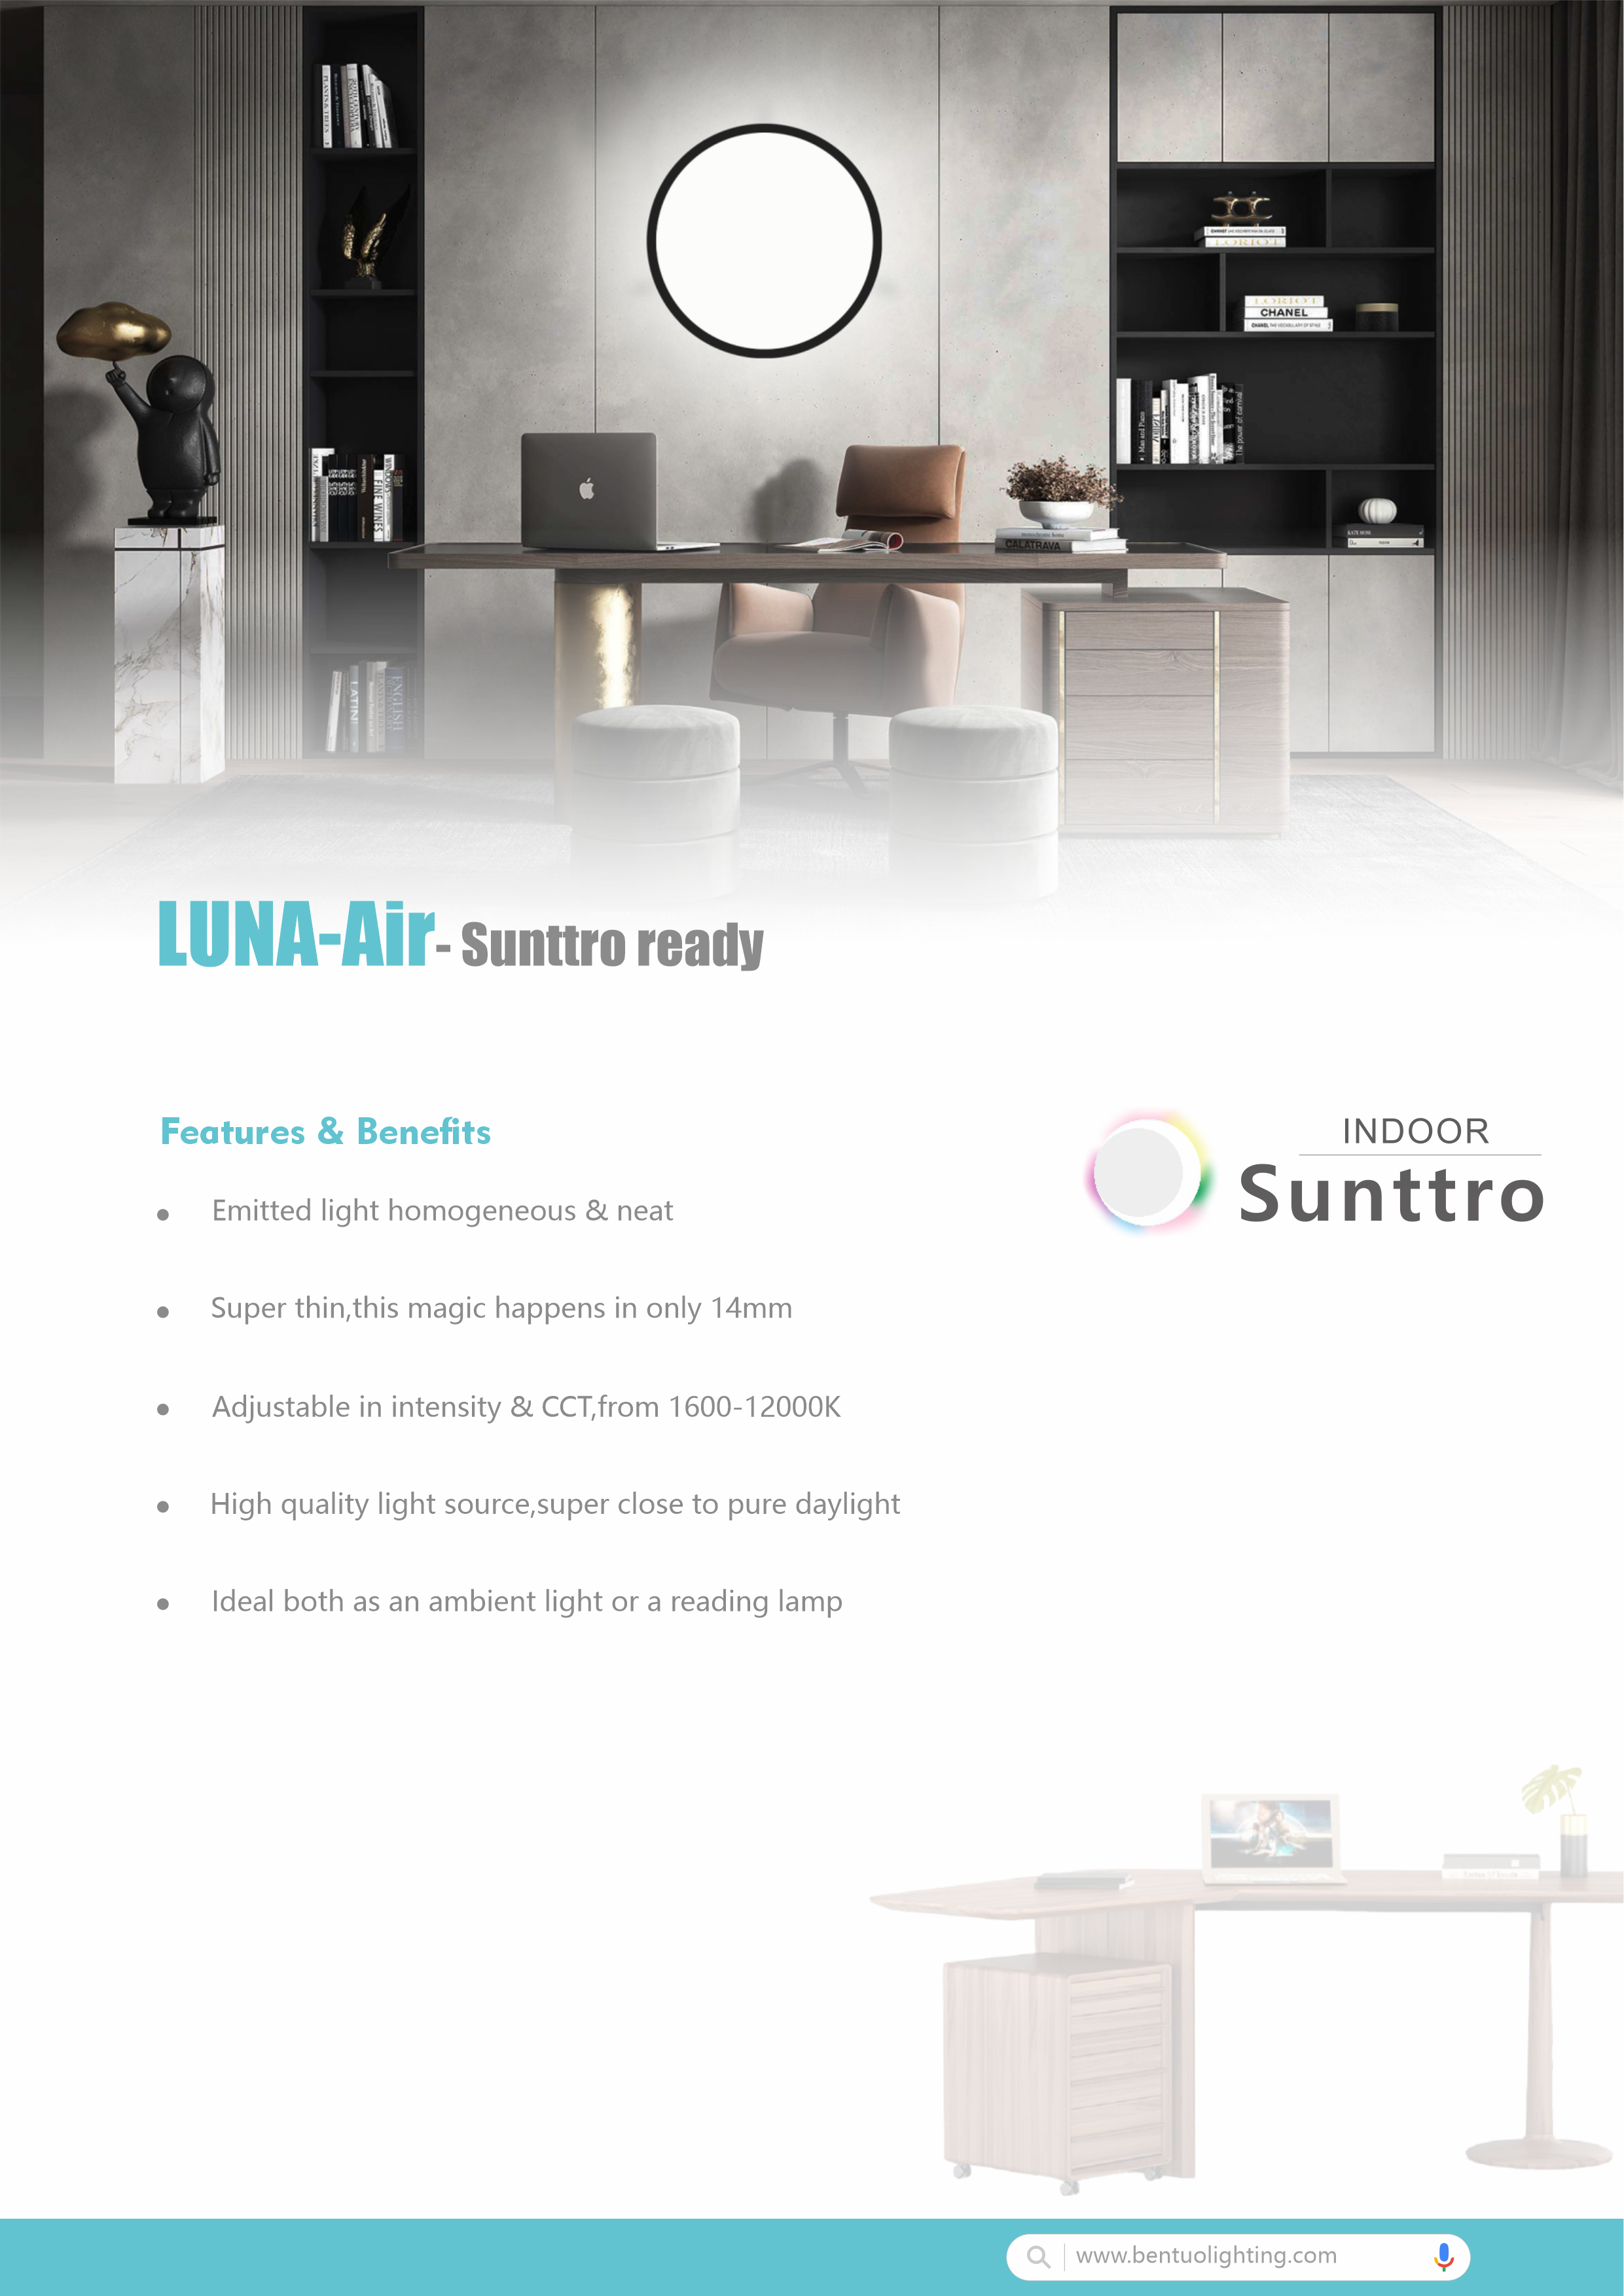 Luna-air- Sunttro ready详情页1.png